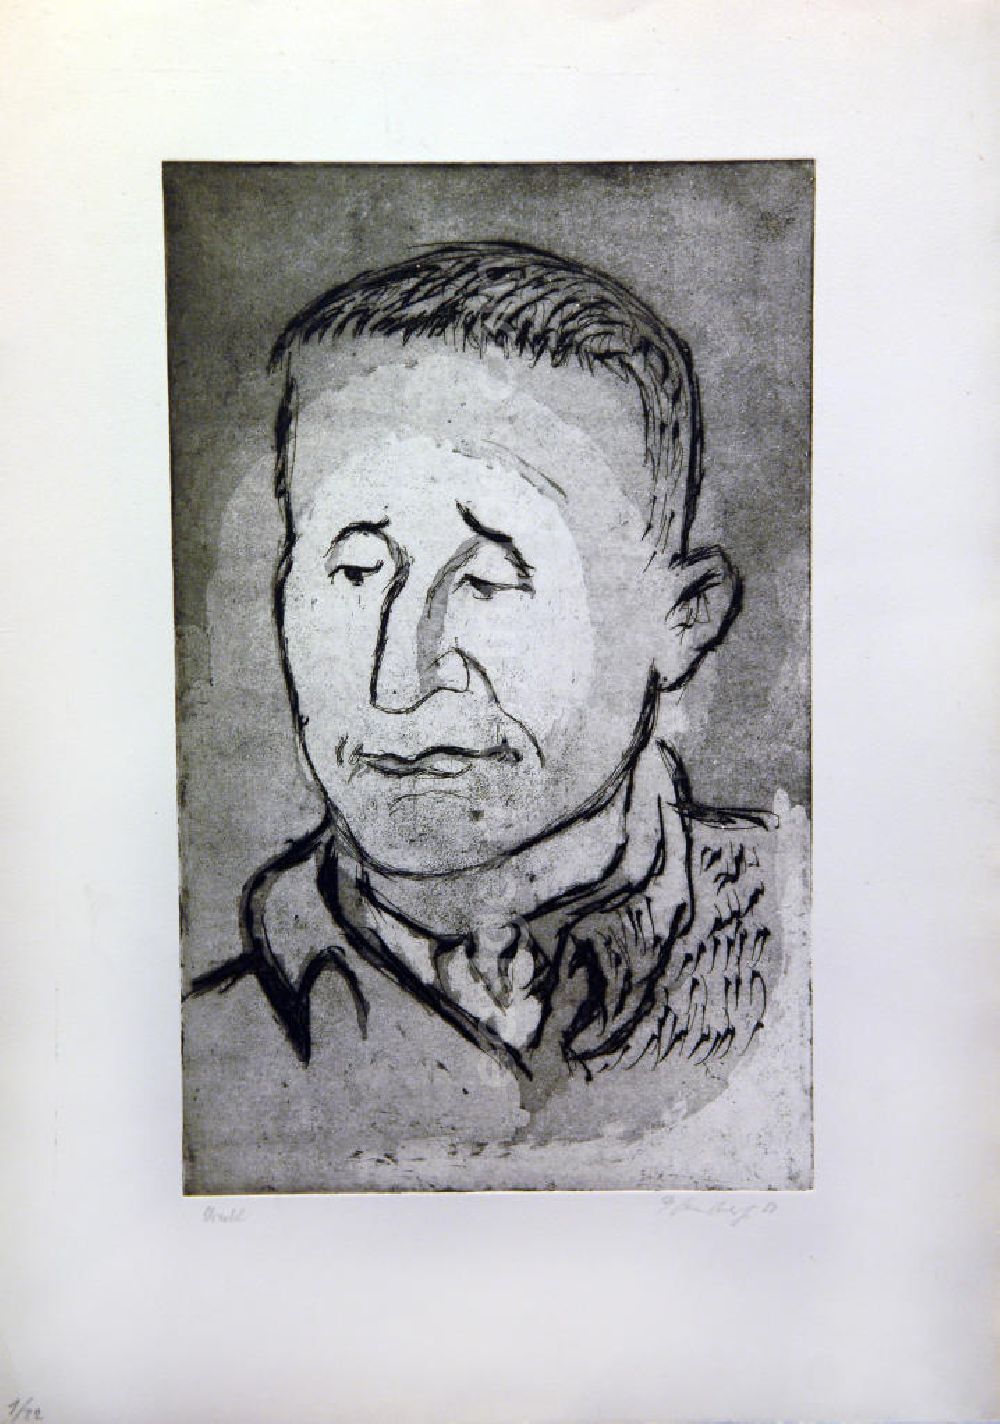 Berlin: Grafik von Herbert Sandberg über Bertolt Brecht (*10.02.1898 †14.08.1956) aus dem Jahr 1958 (Porträt links) 38,6x24,